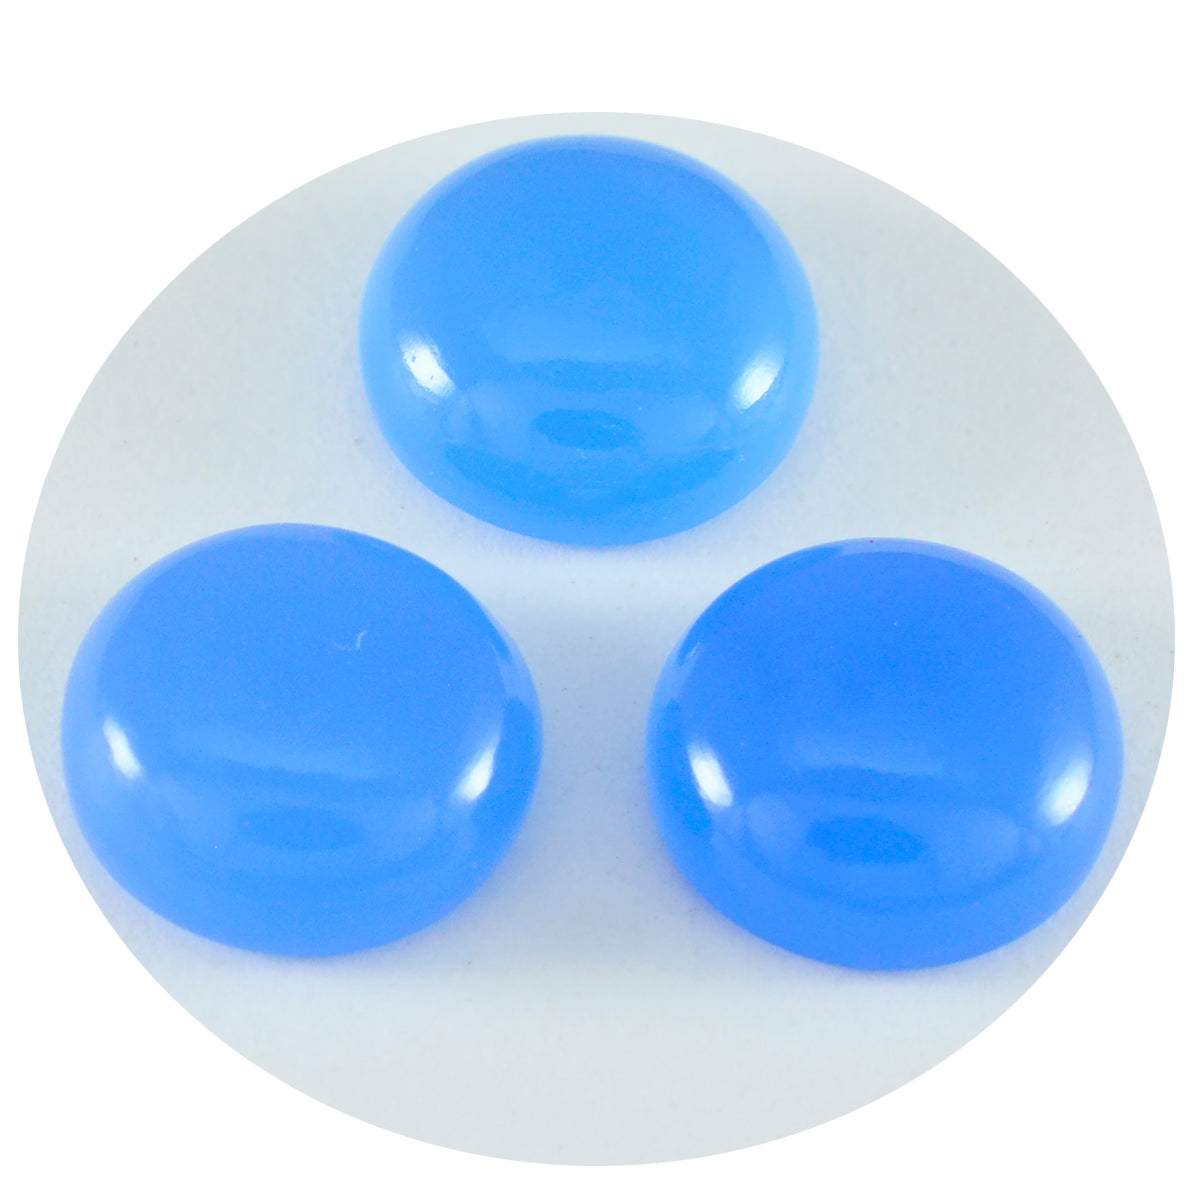 Riyogems 1PC Blue Chalcedony Cabochon 8x8 mm Round Shape beautiful Quality Gemstone